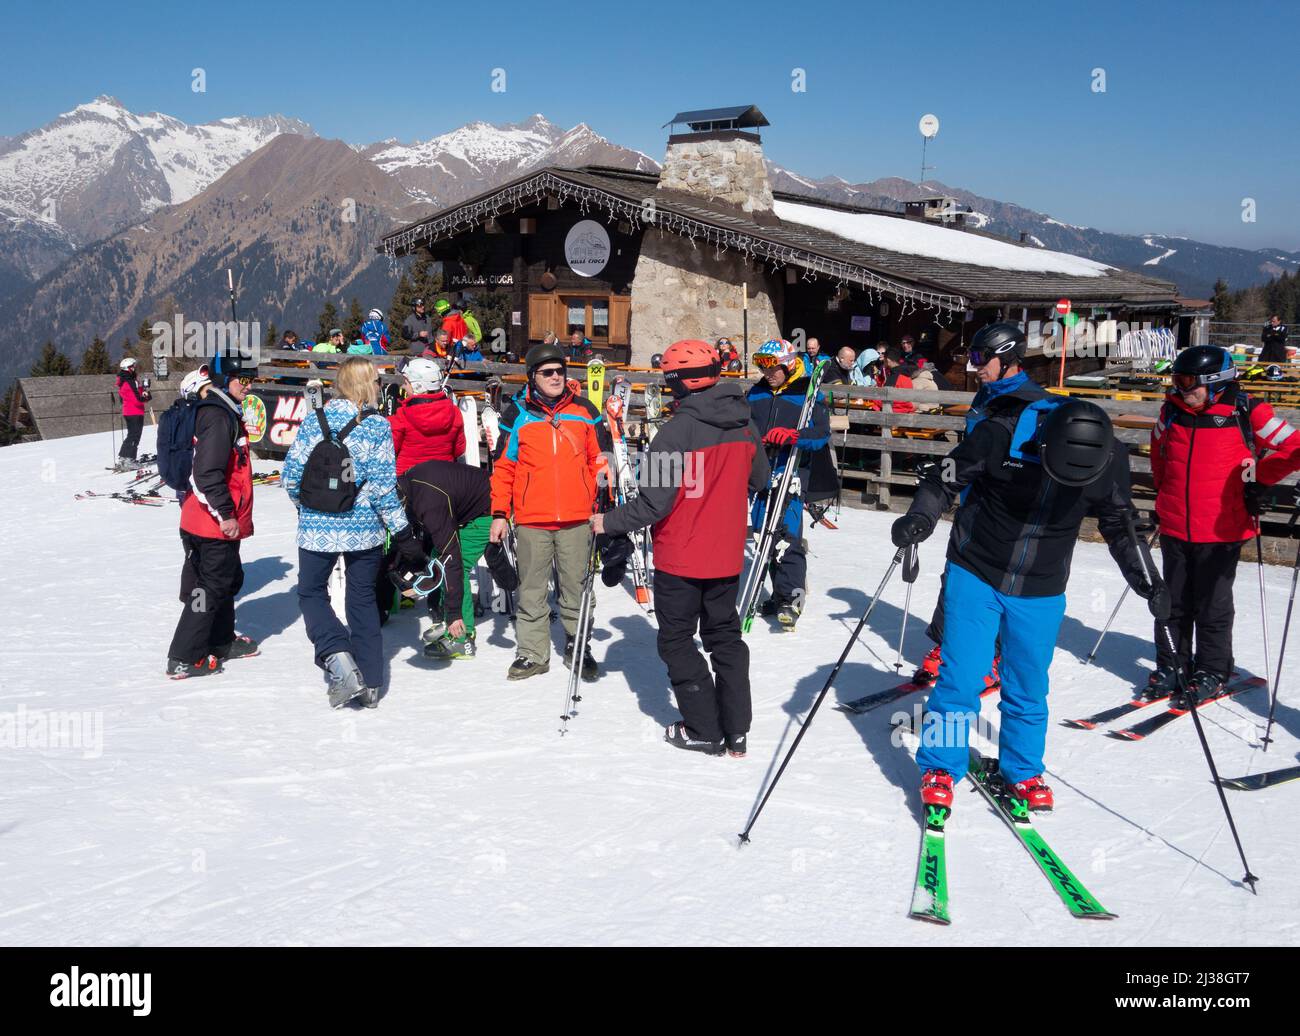 Italy Ski holiday scene - skiers skiing to the Malga Croca mountain restaurant and bar for food and drink, Pinzolo Dolomites Italy Europe Stock Photo